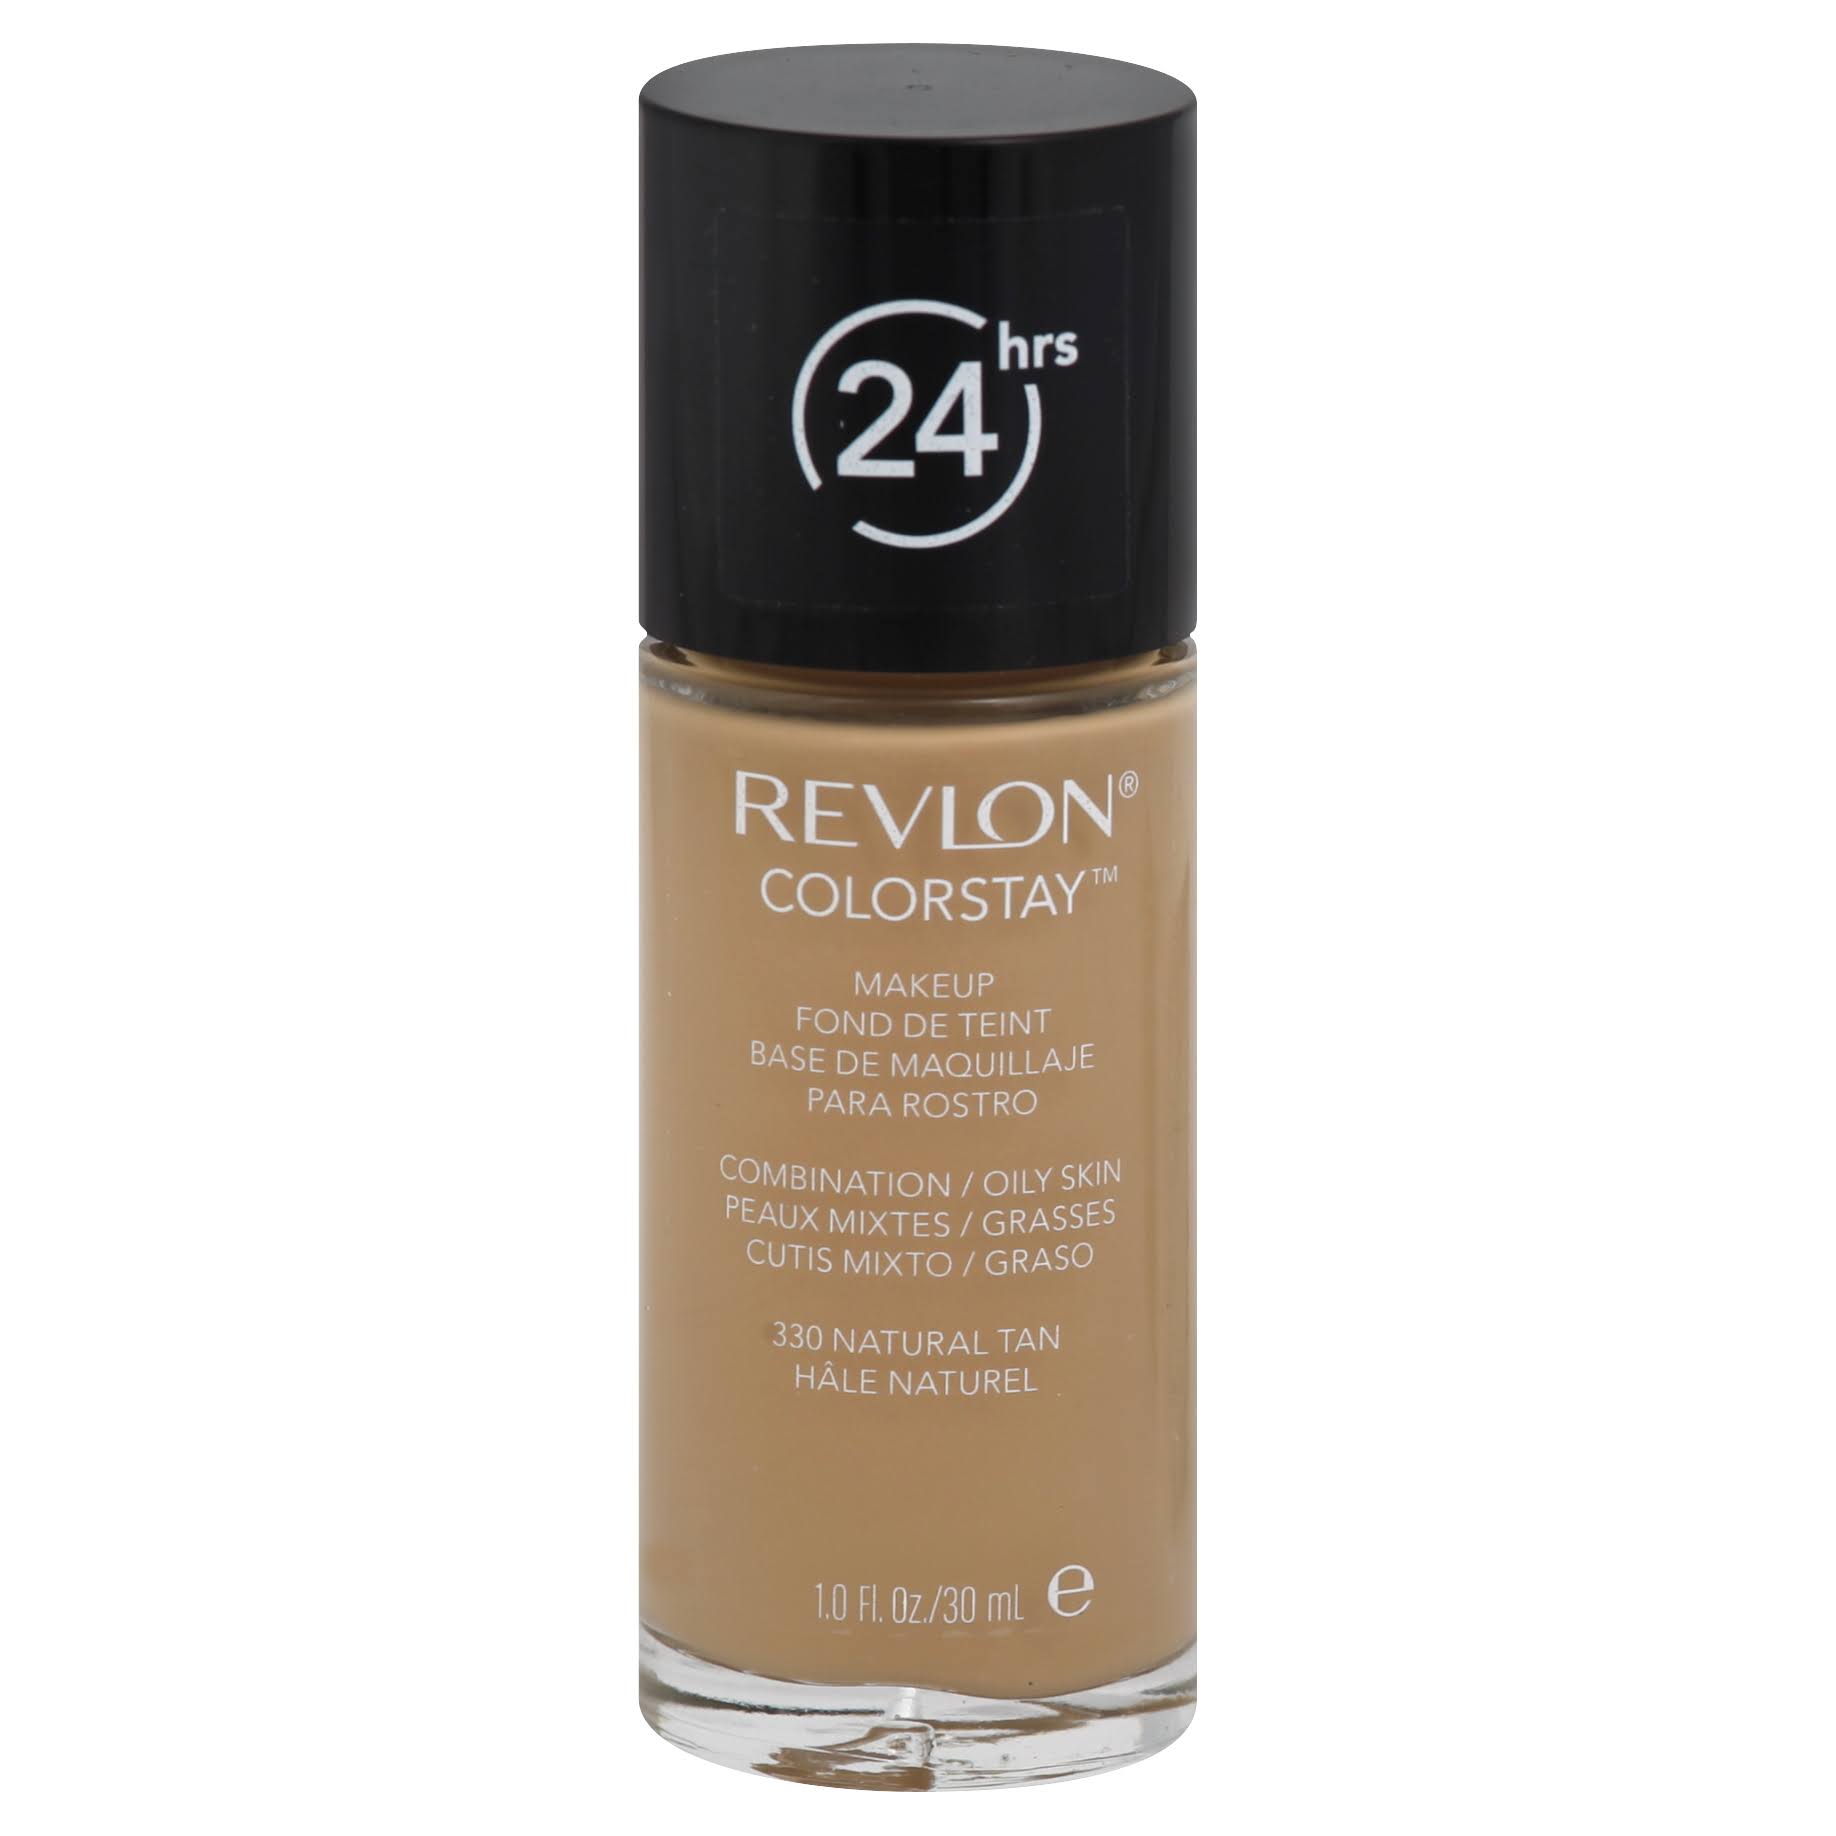 Revlon Colorstay Makeup Combination - Natural Tan, Oily Skin